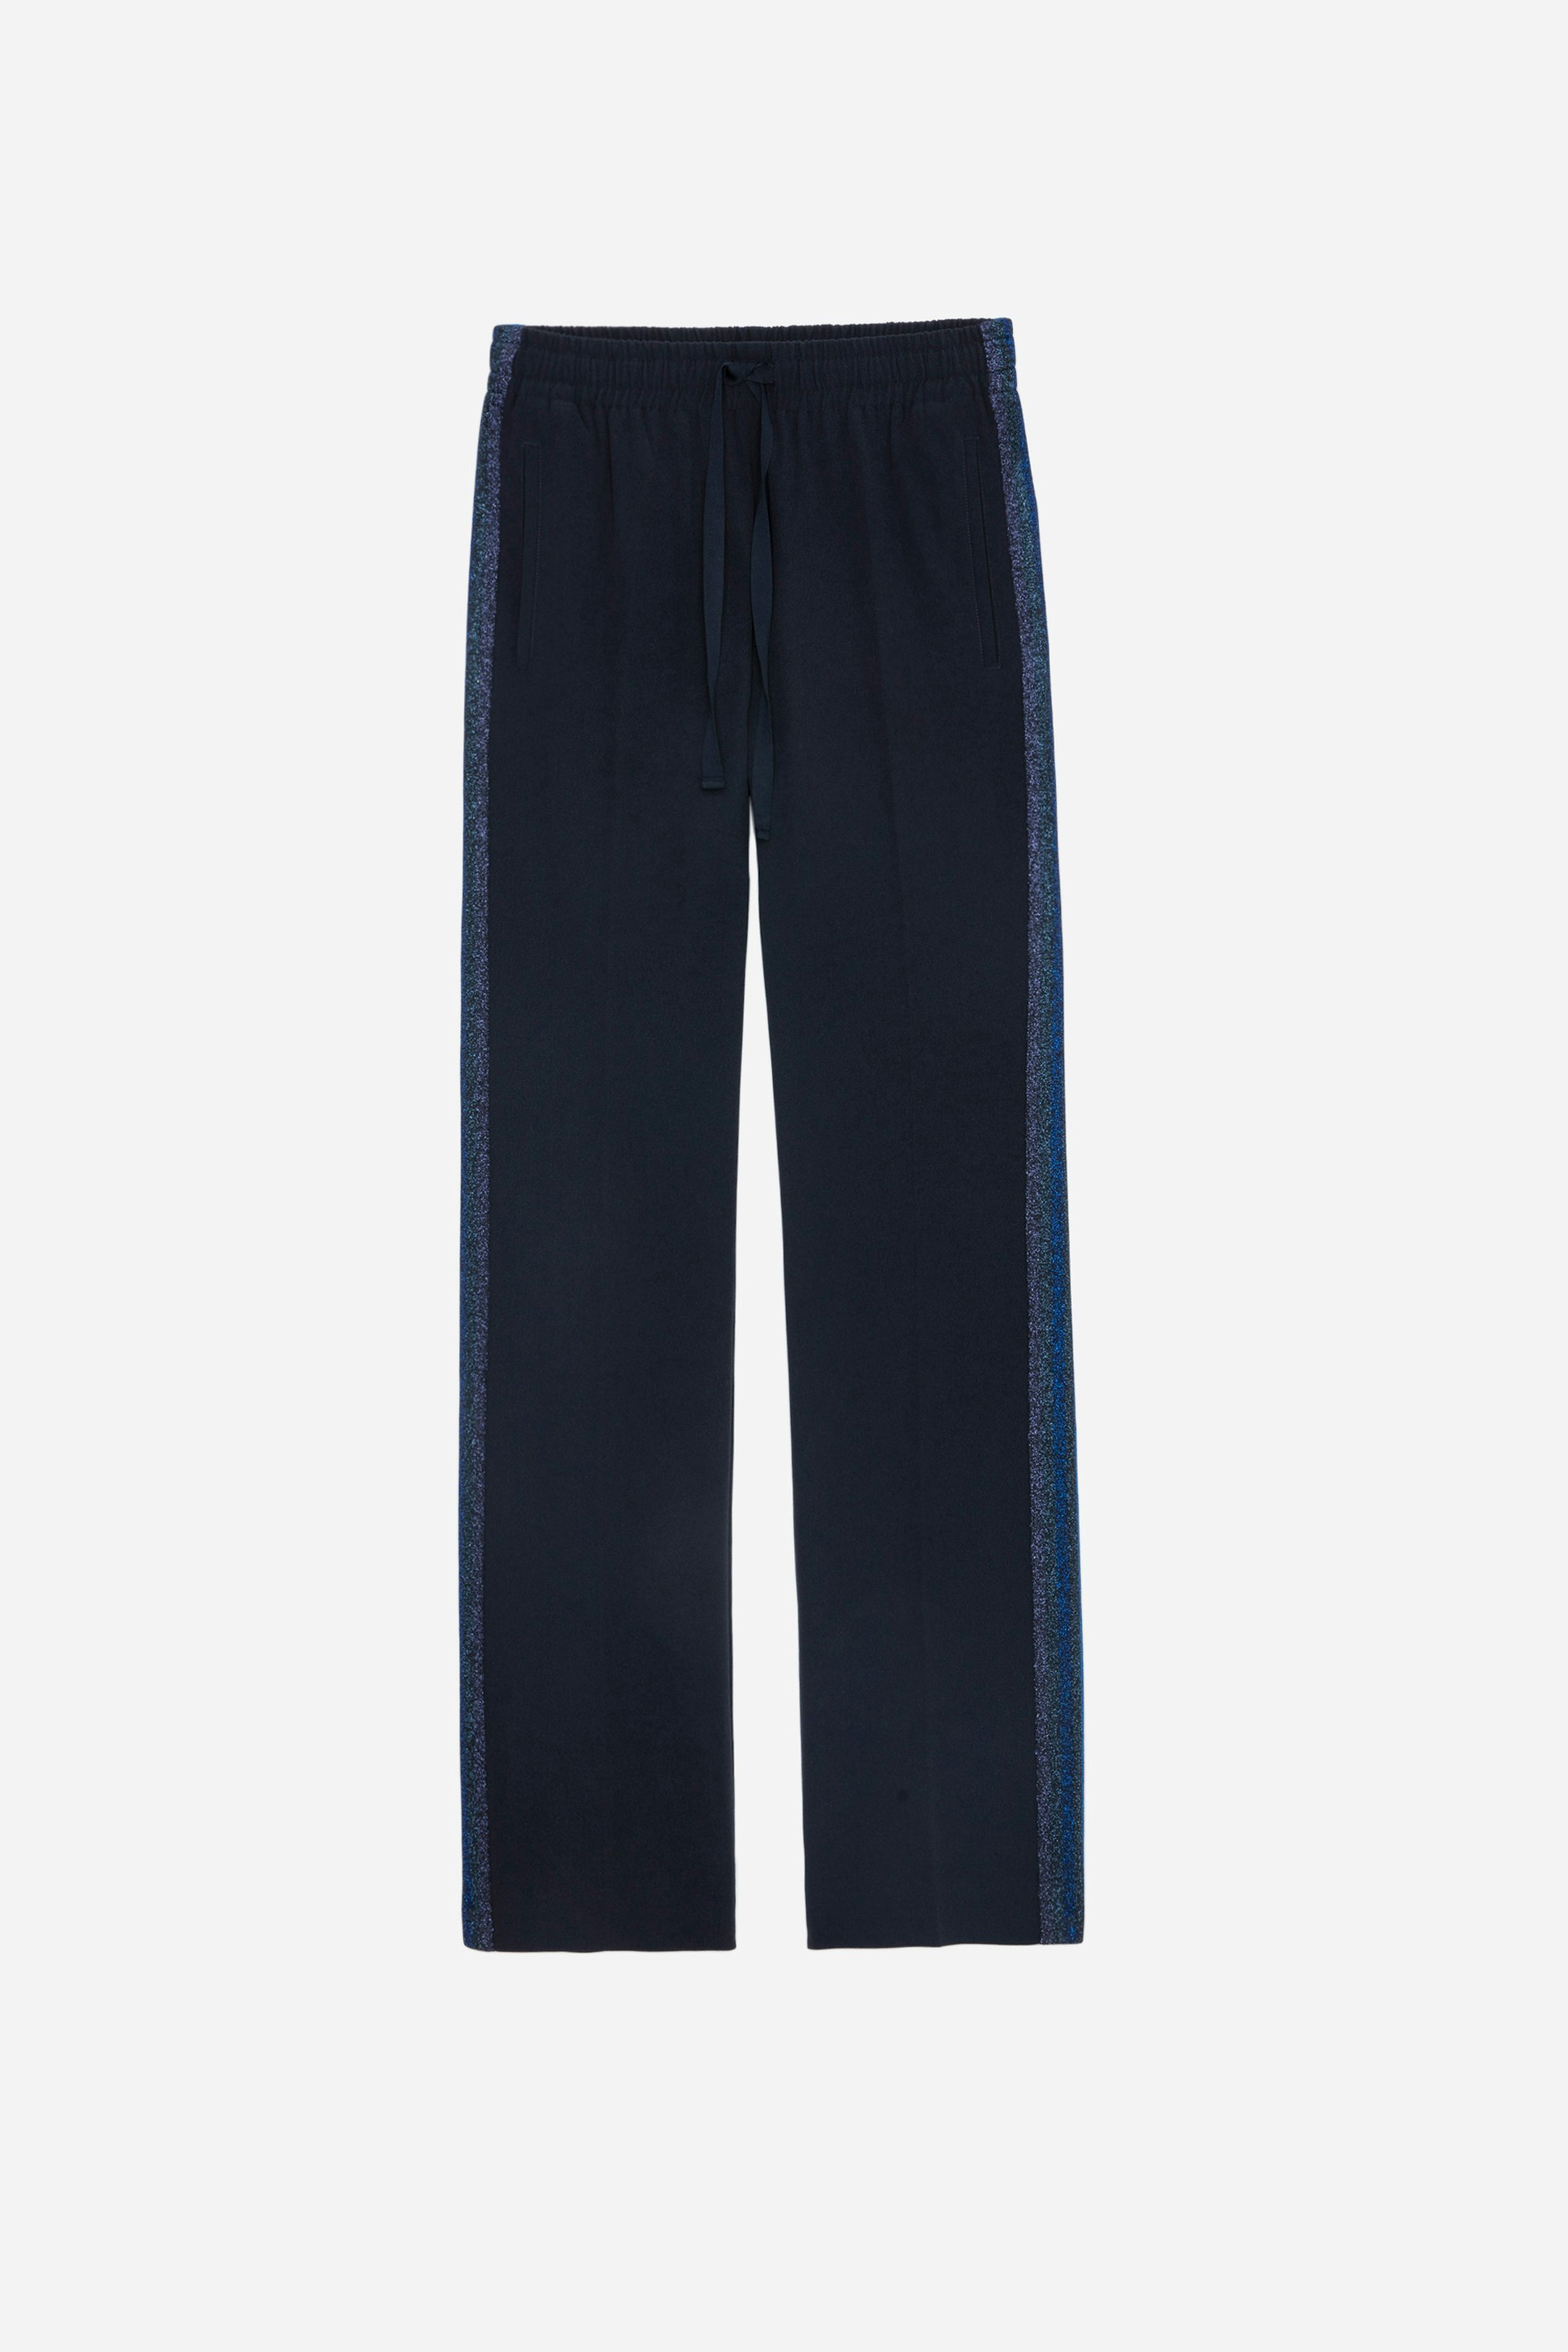 Pantaloni Pomy - Pantaloni da donna in crêpe blu navy con strisce laterali a paillette